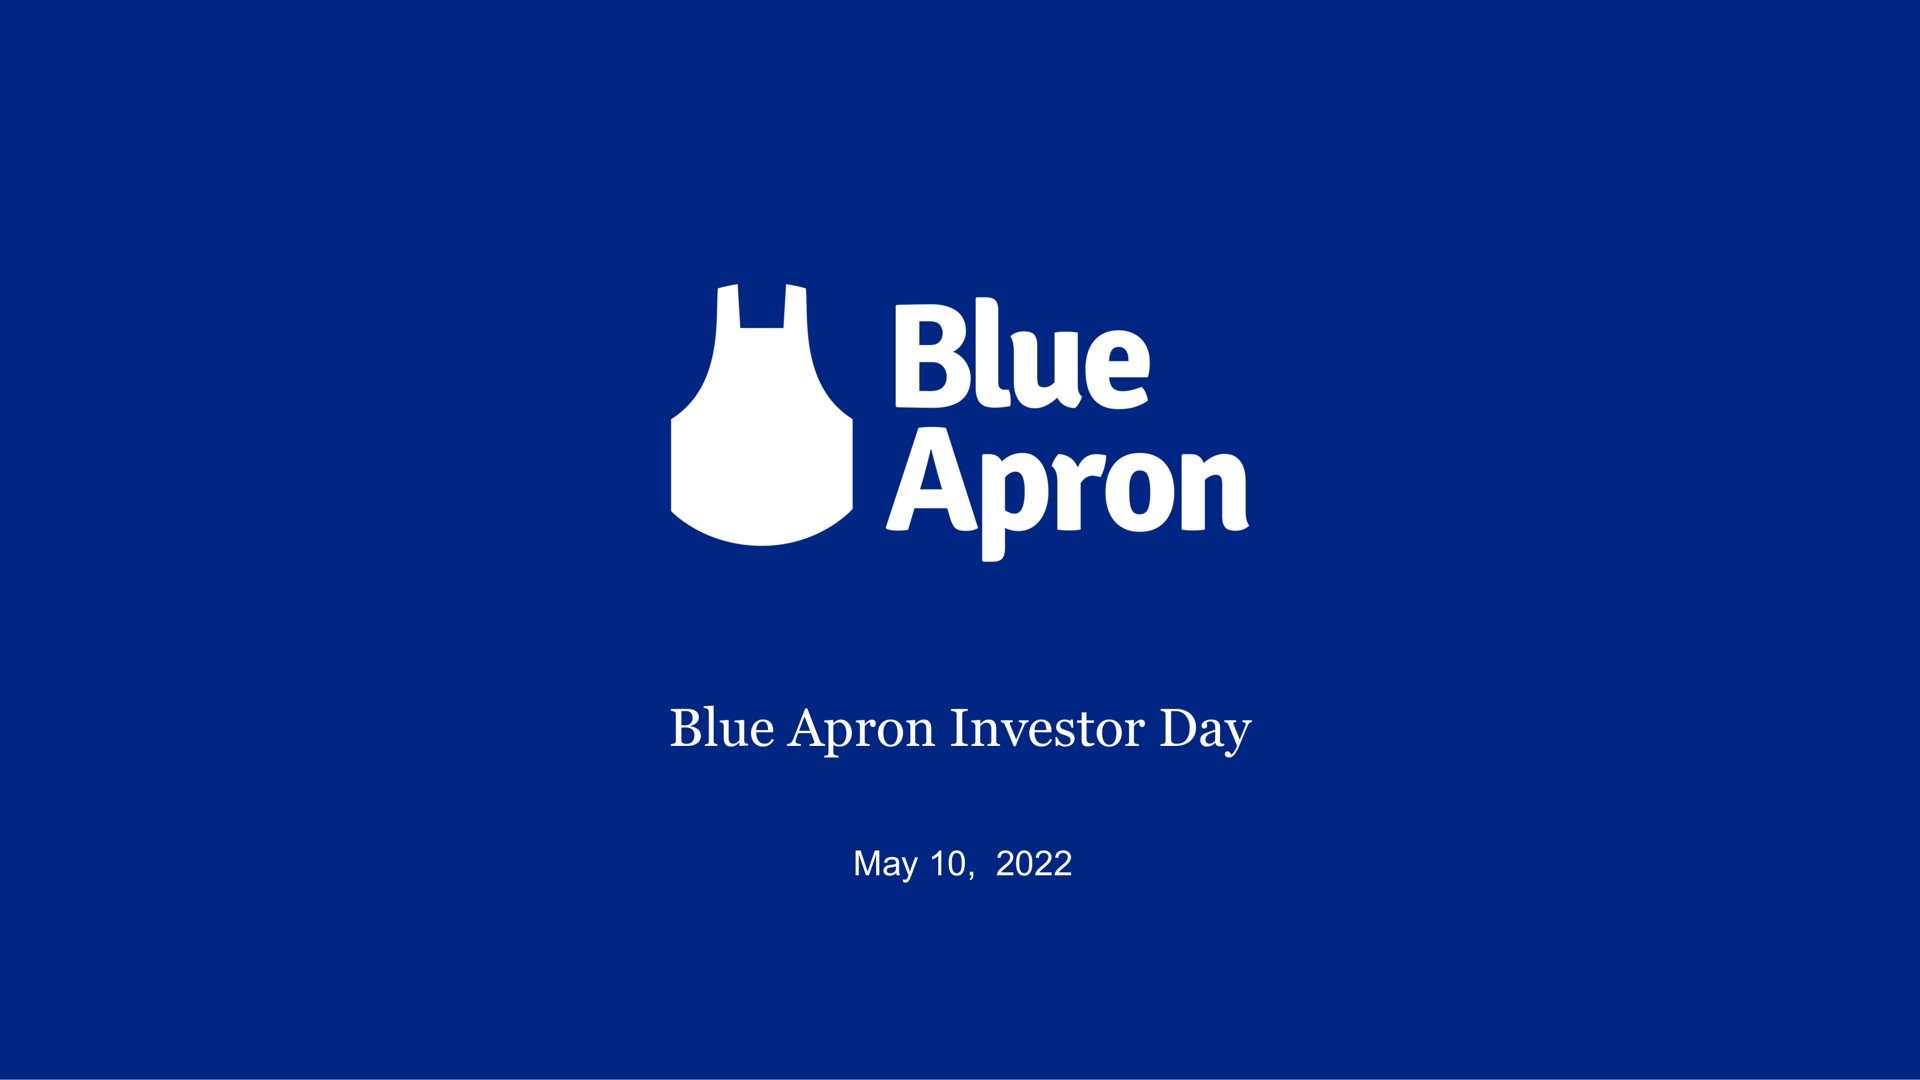 blue apron investor day | Blue Apron